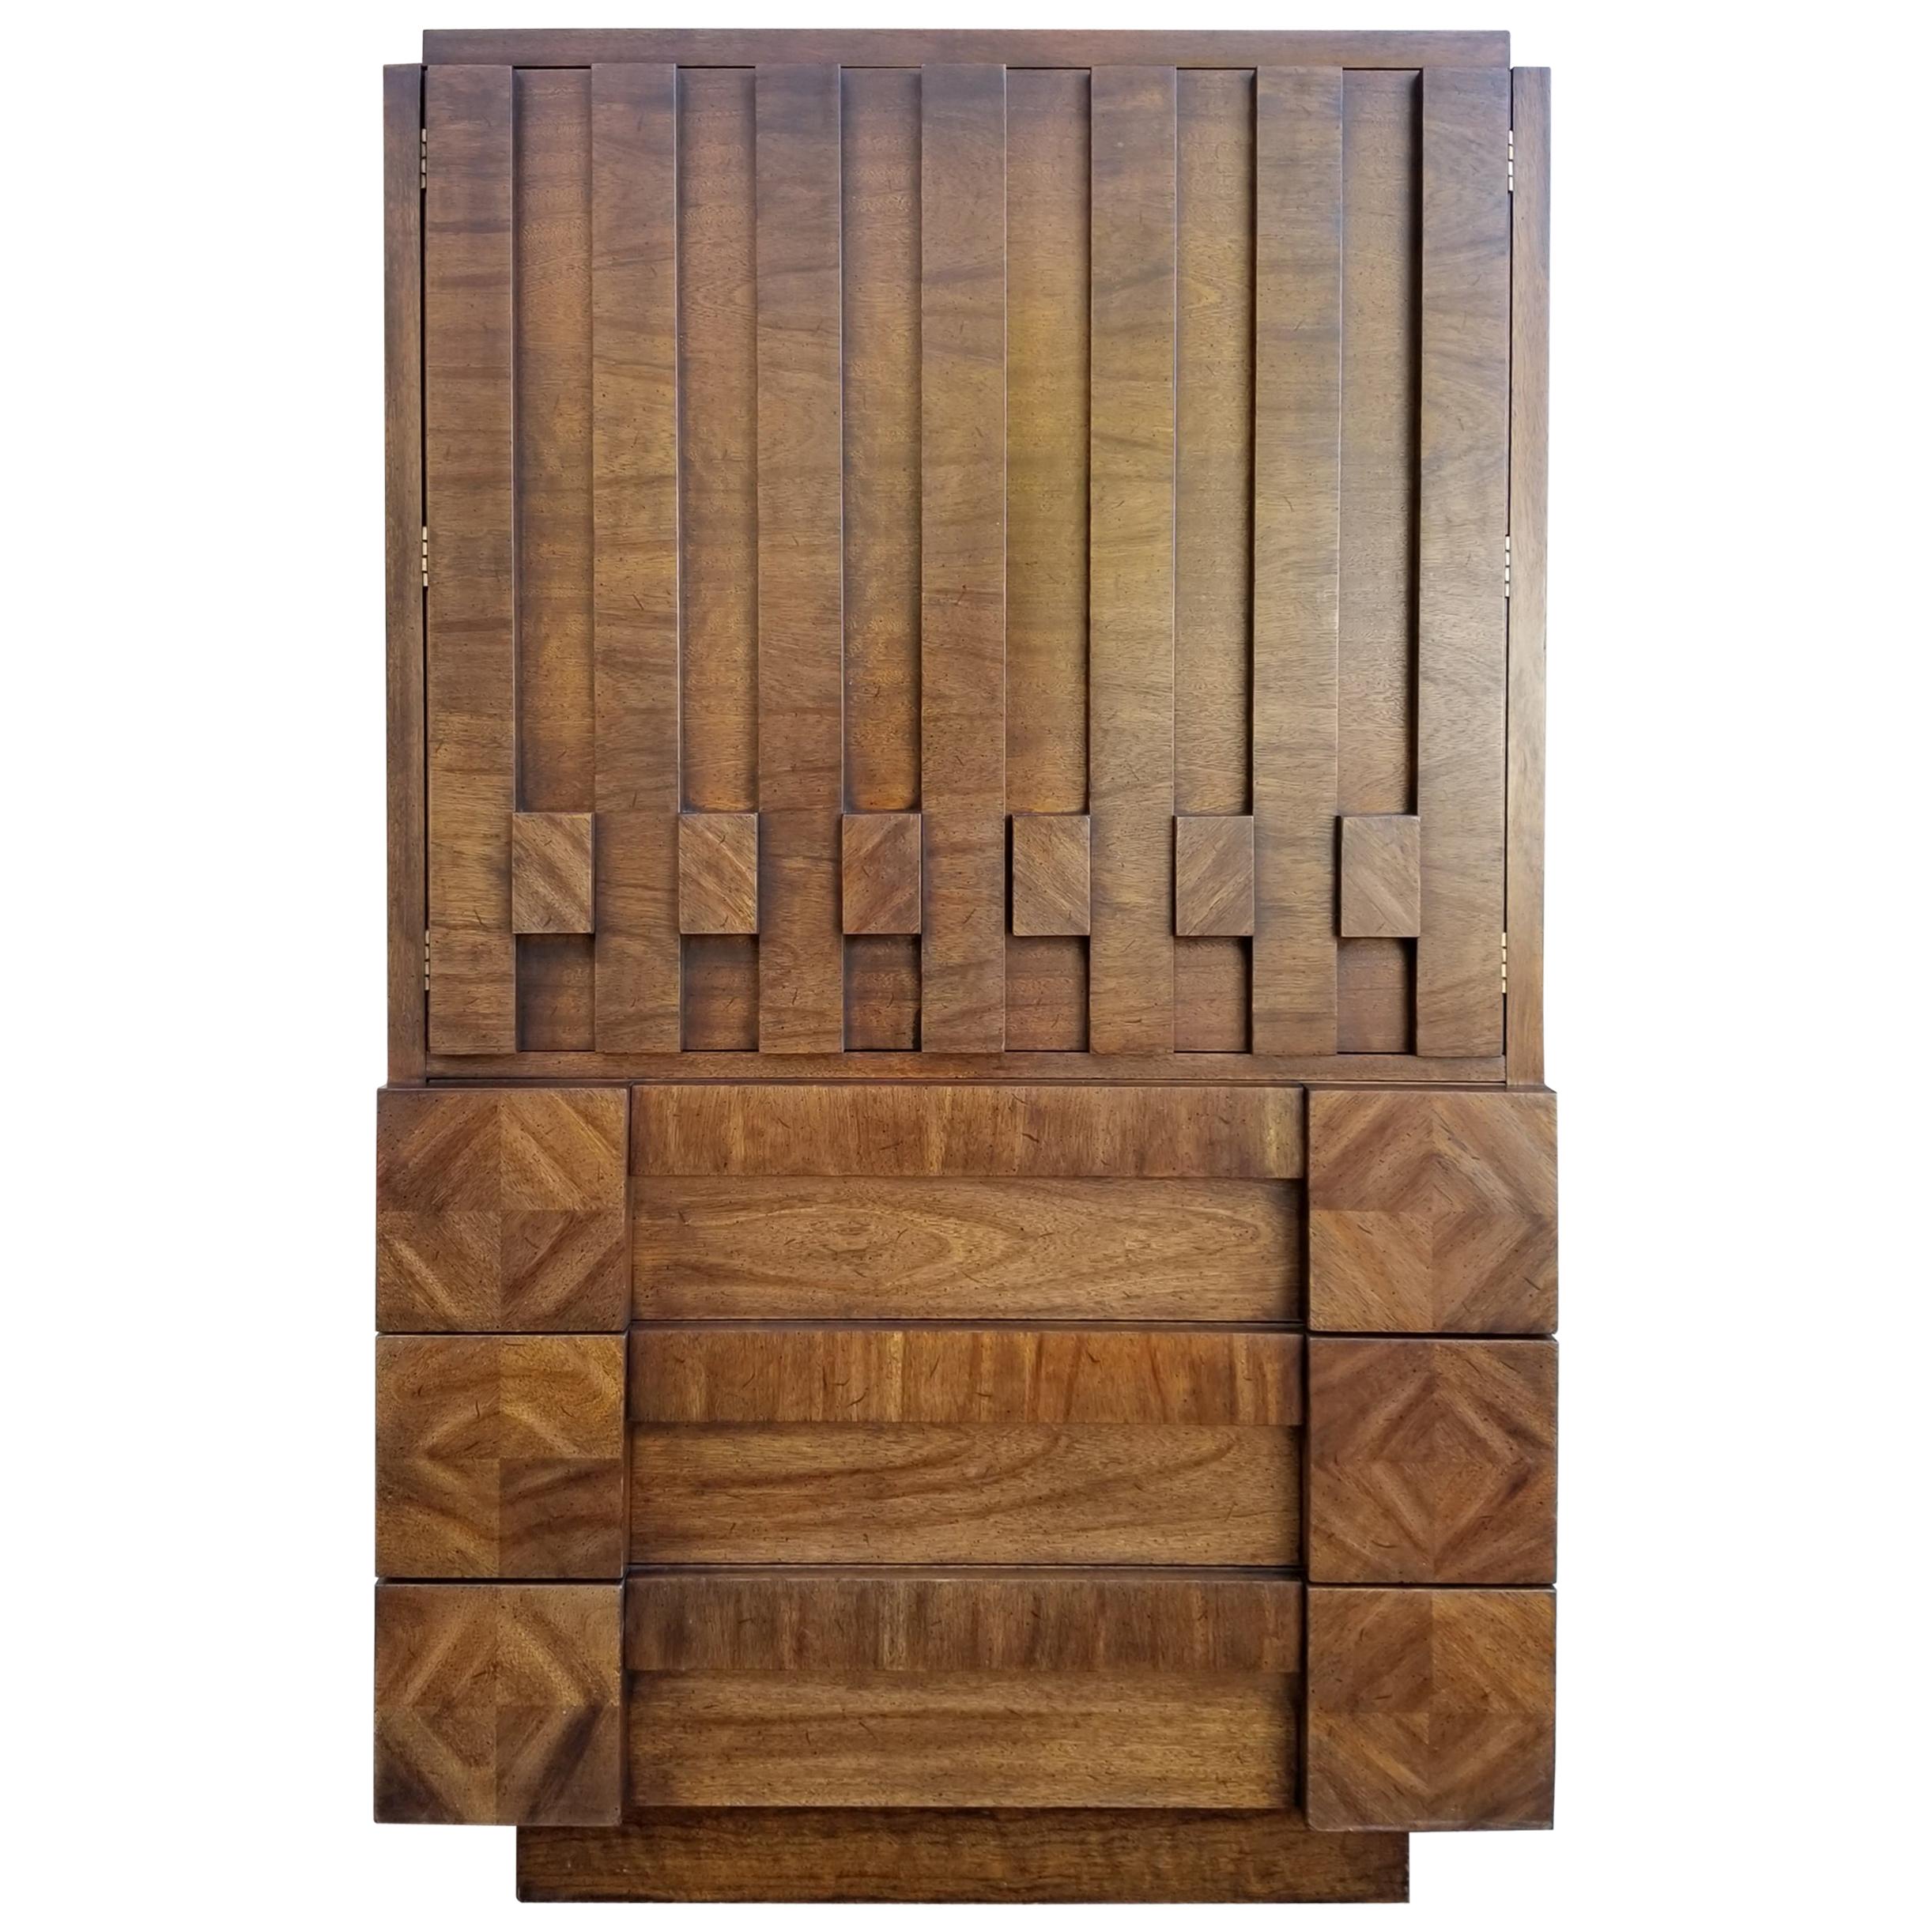 Lane Furniture "Staccato" Brutalist Tall Dresser or Chiffonier